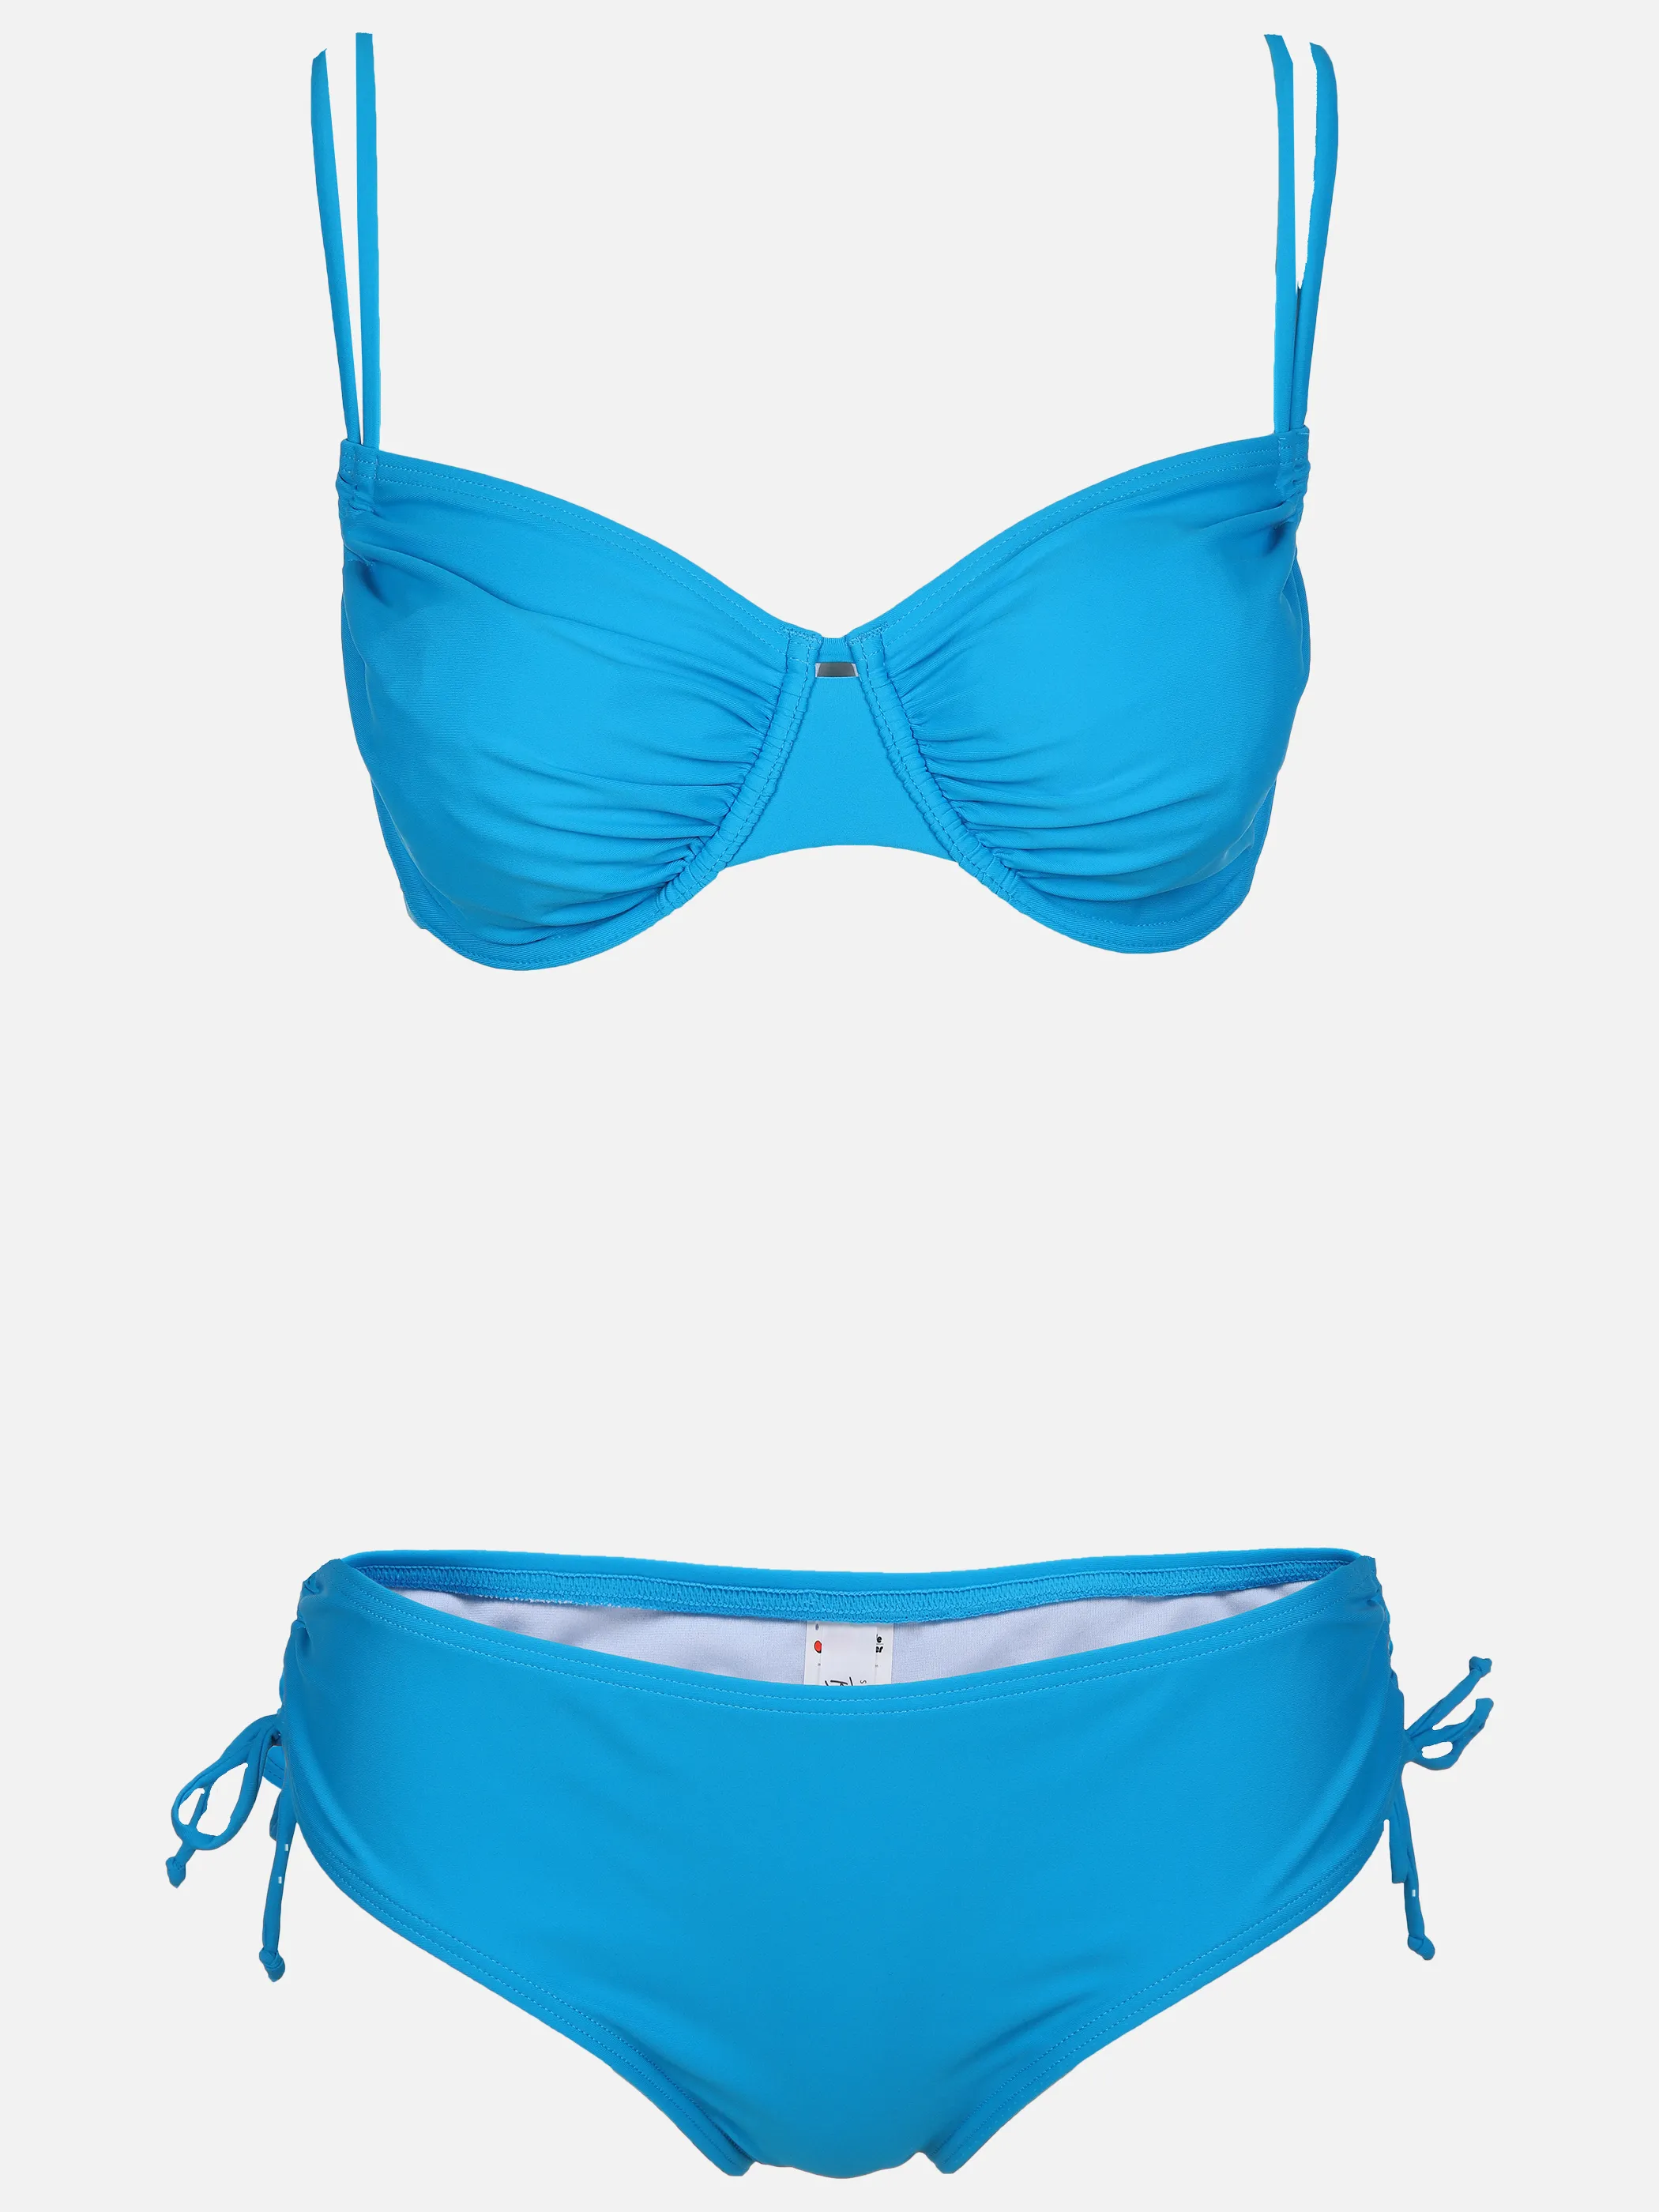 Sonja Blank D-Cup Big Size Da- Bikini Set Blau 891255 BLUE 1